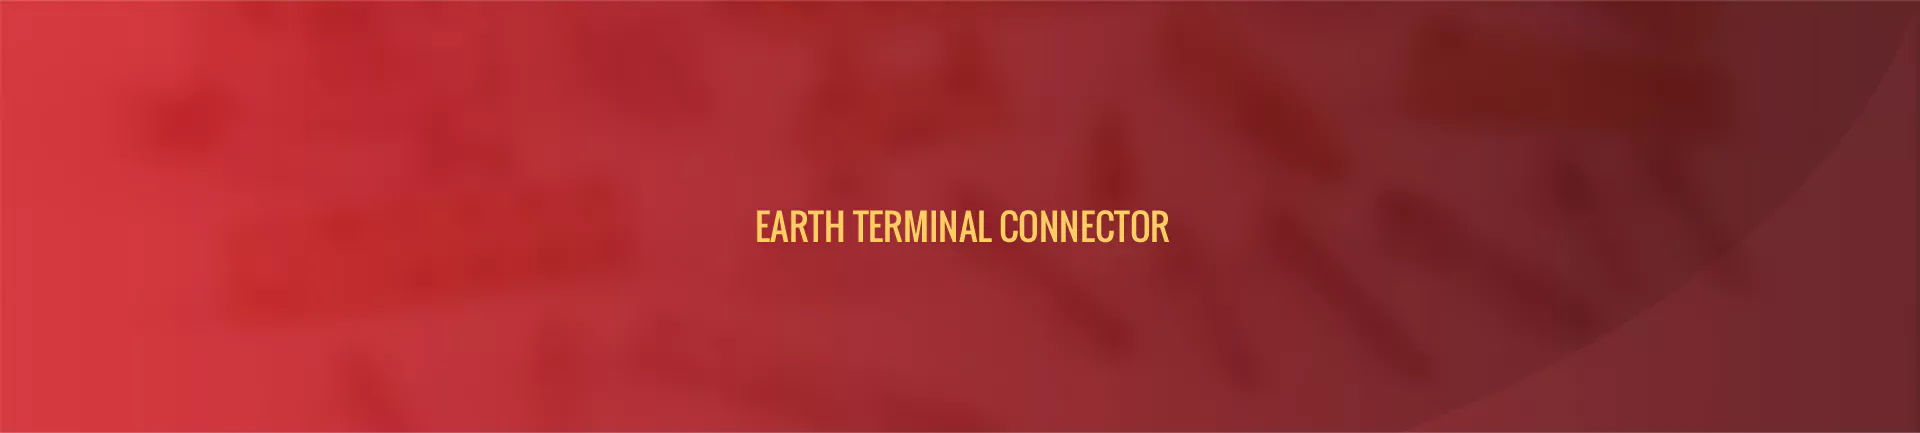 earth-terminal-connector-banner